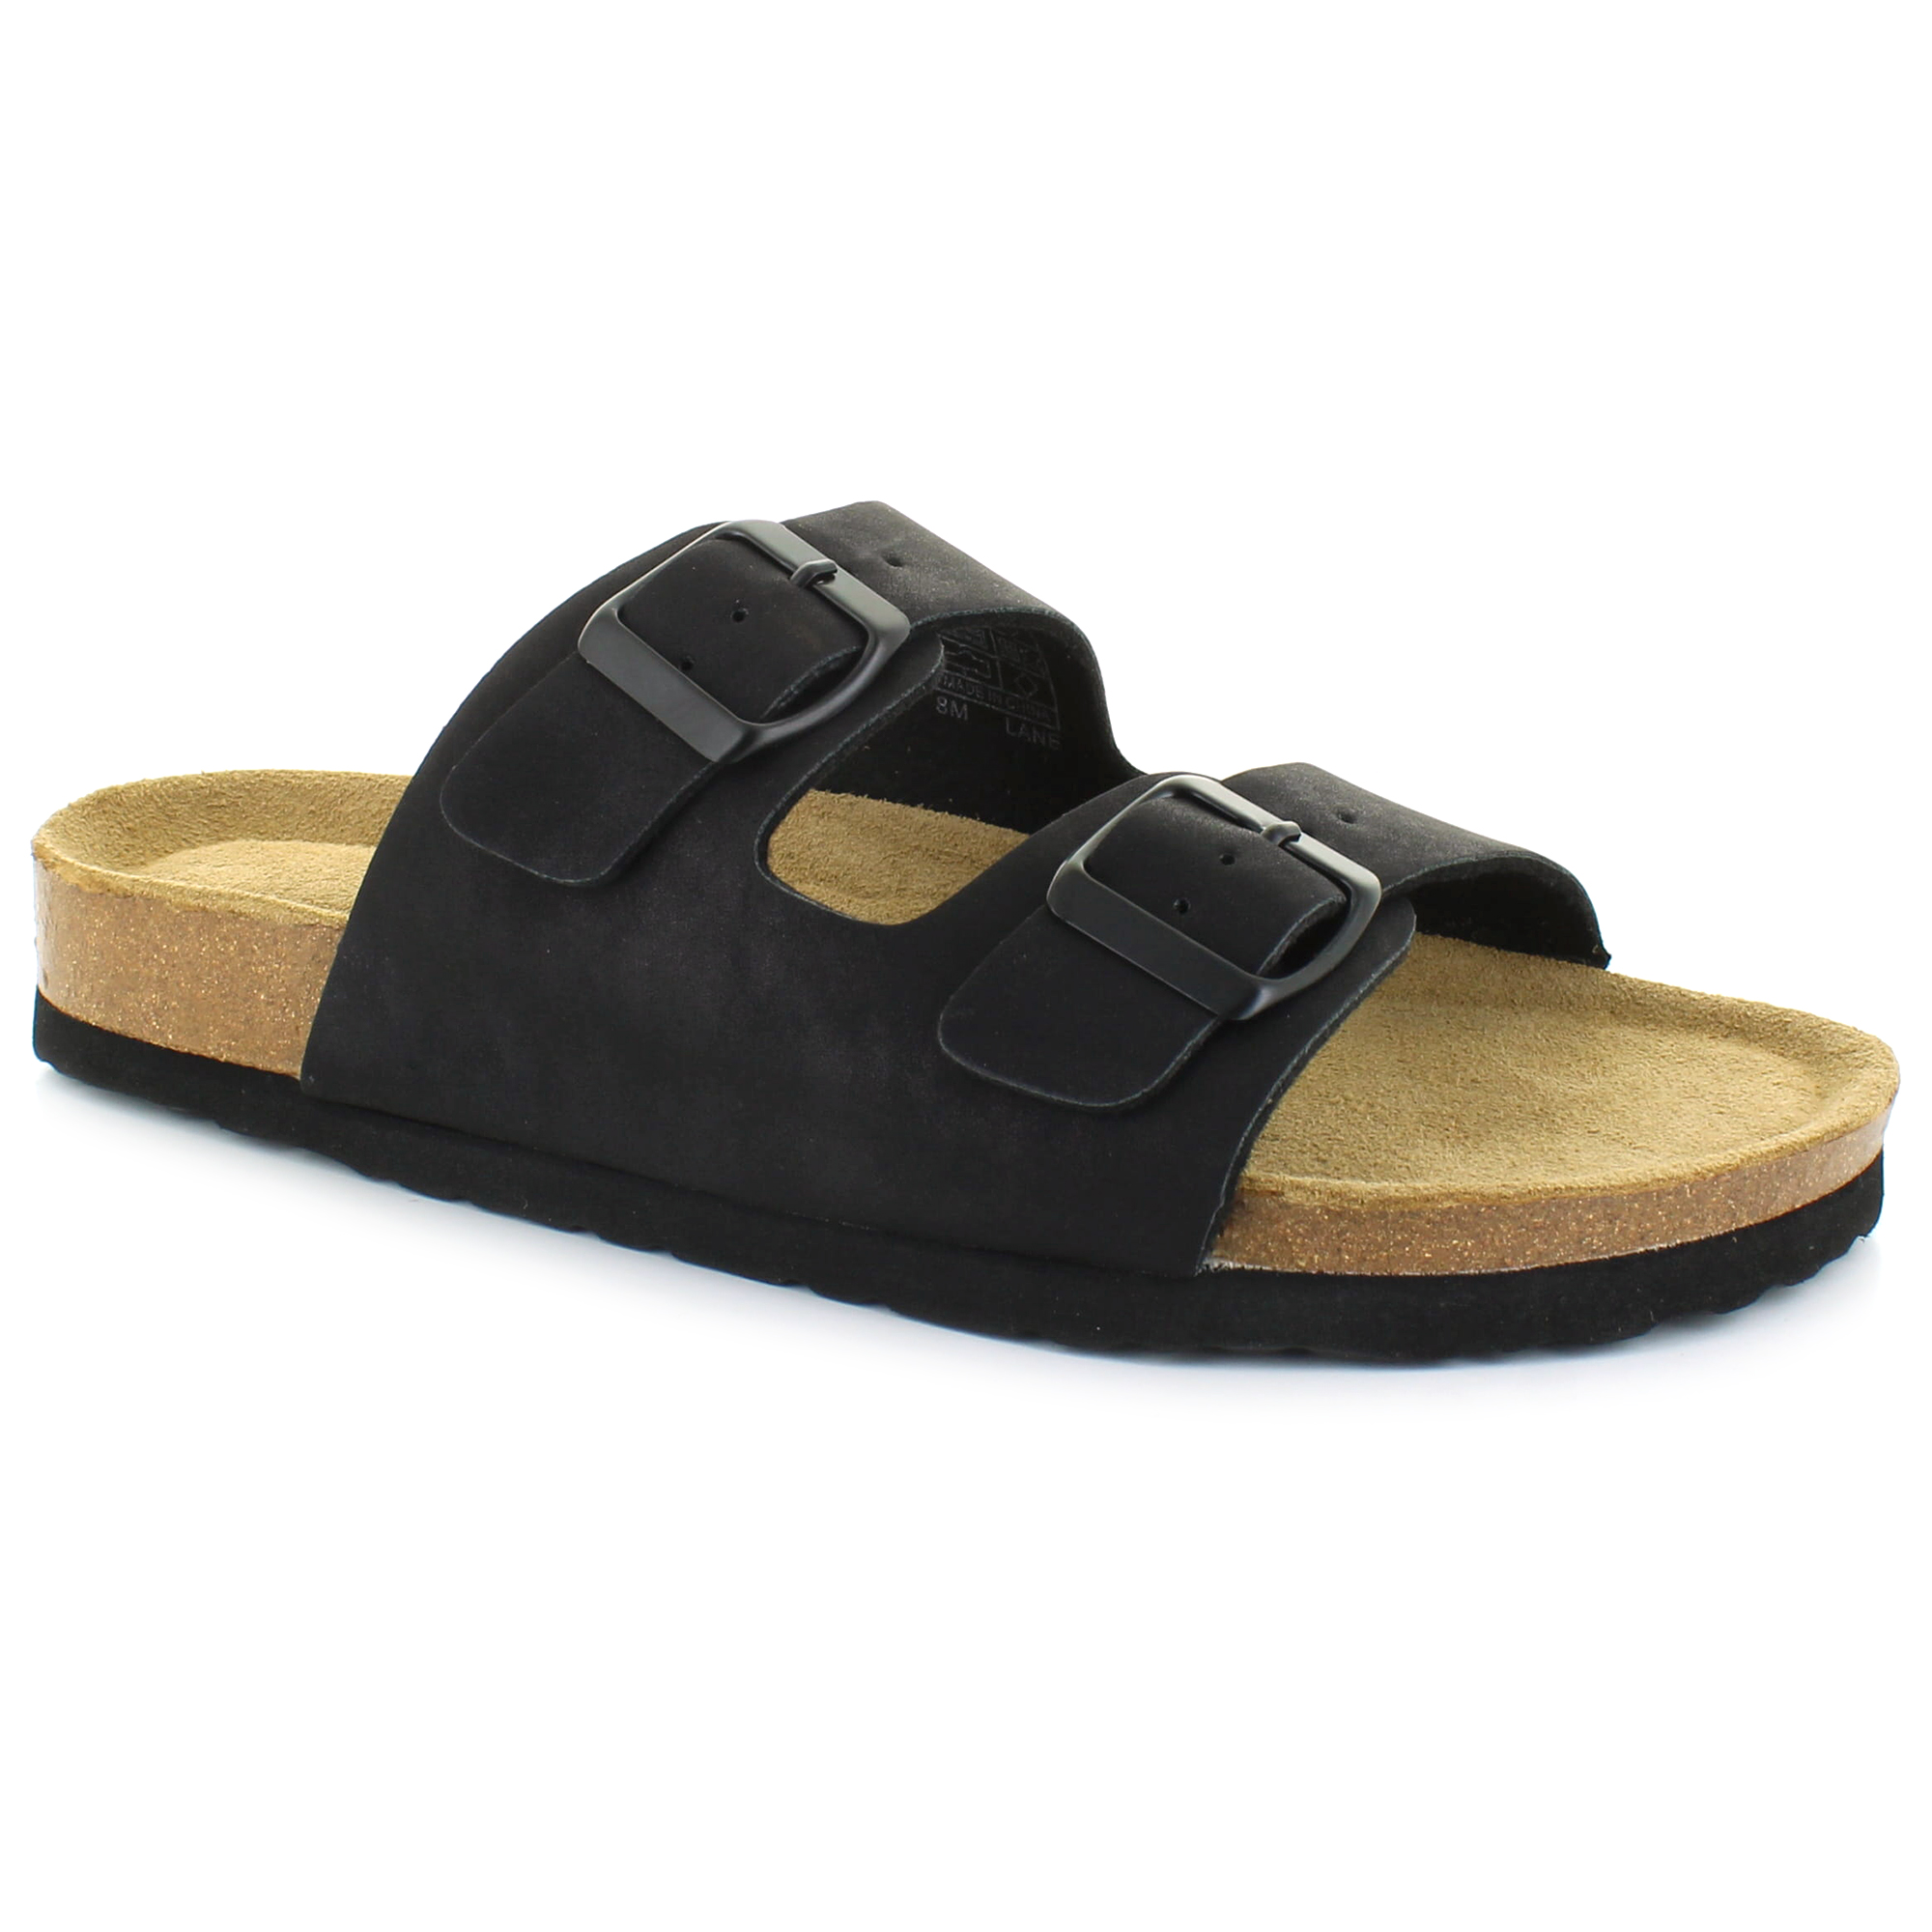 CUSHIONAIRE Women/'s Lane Slide Sandals